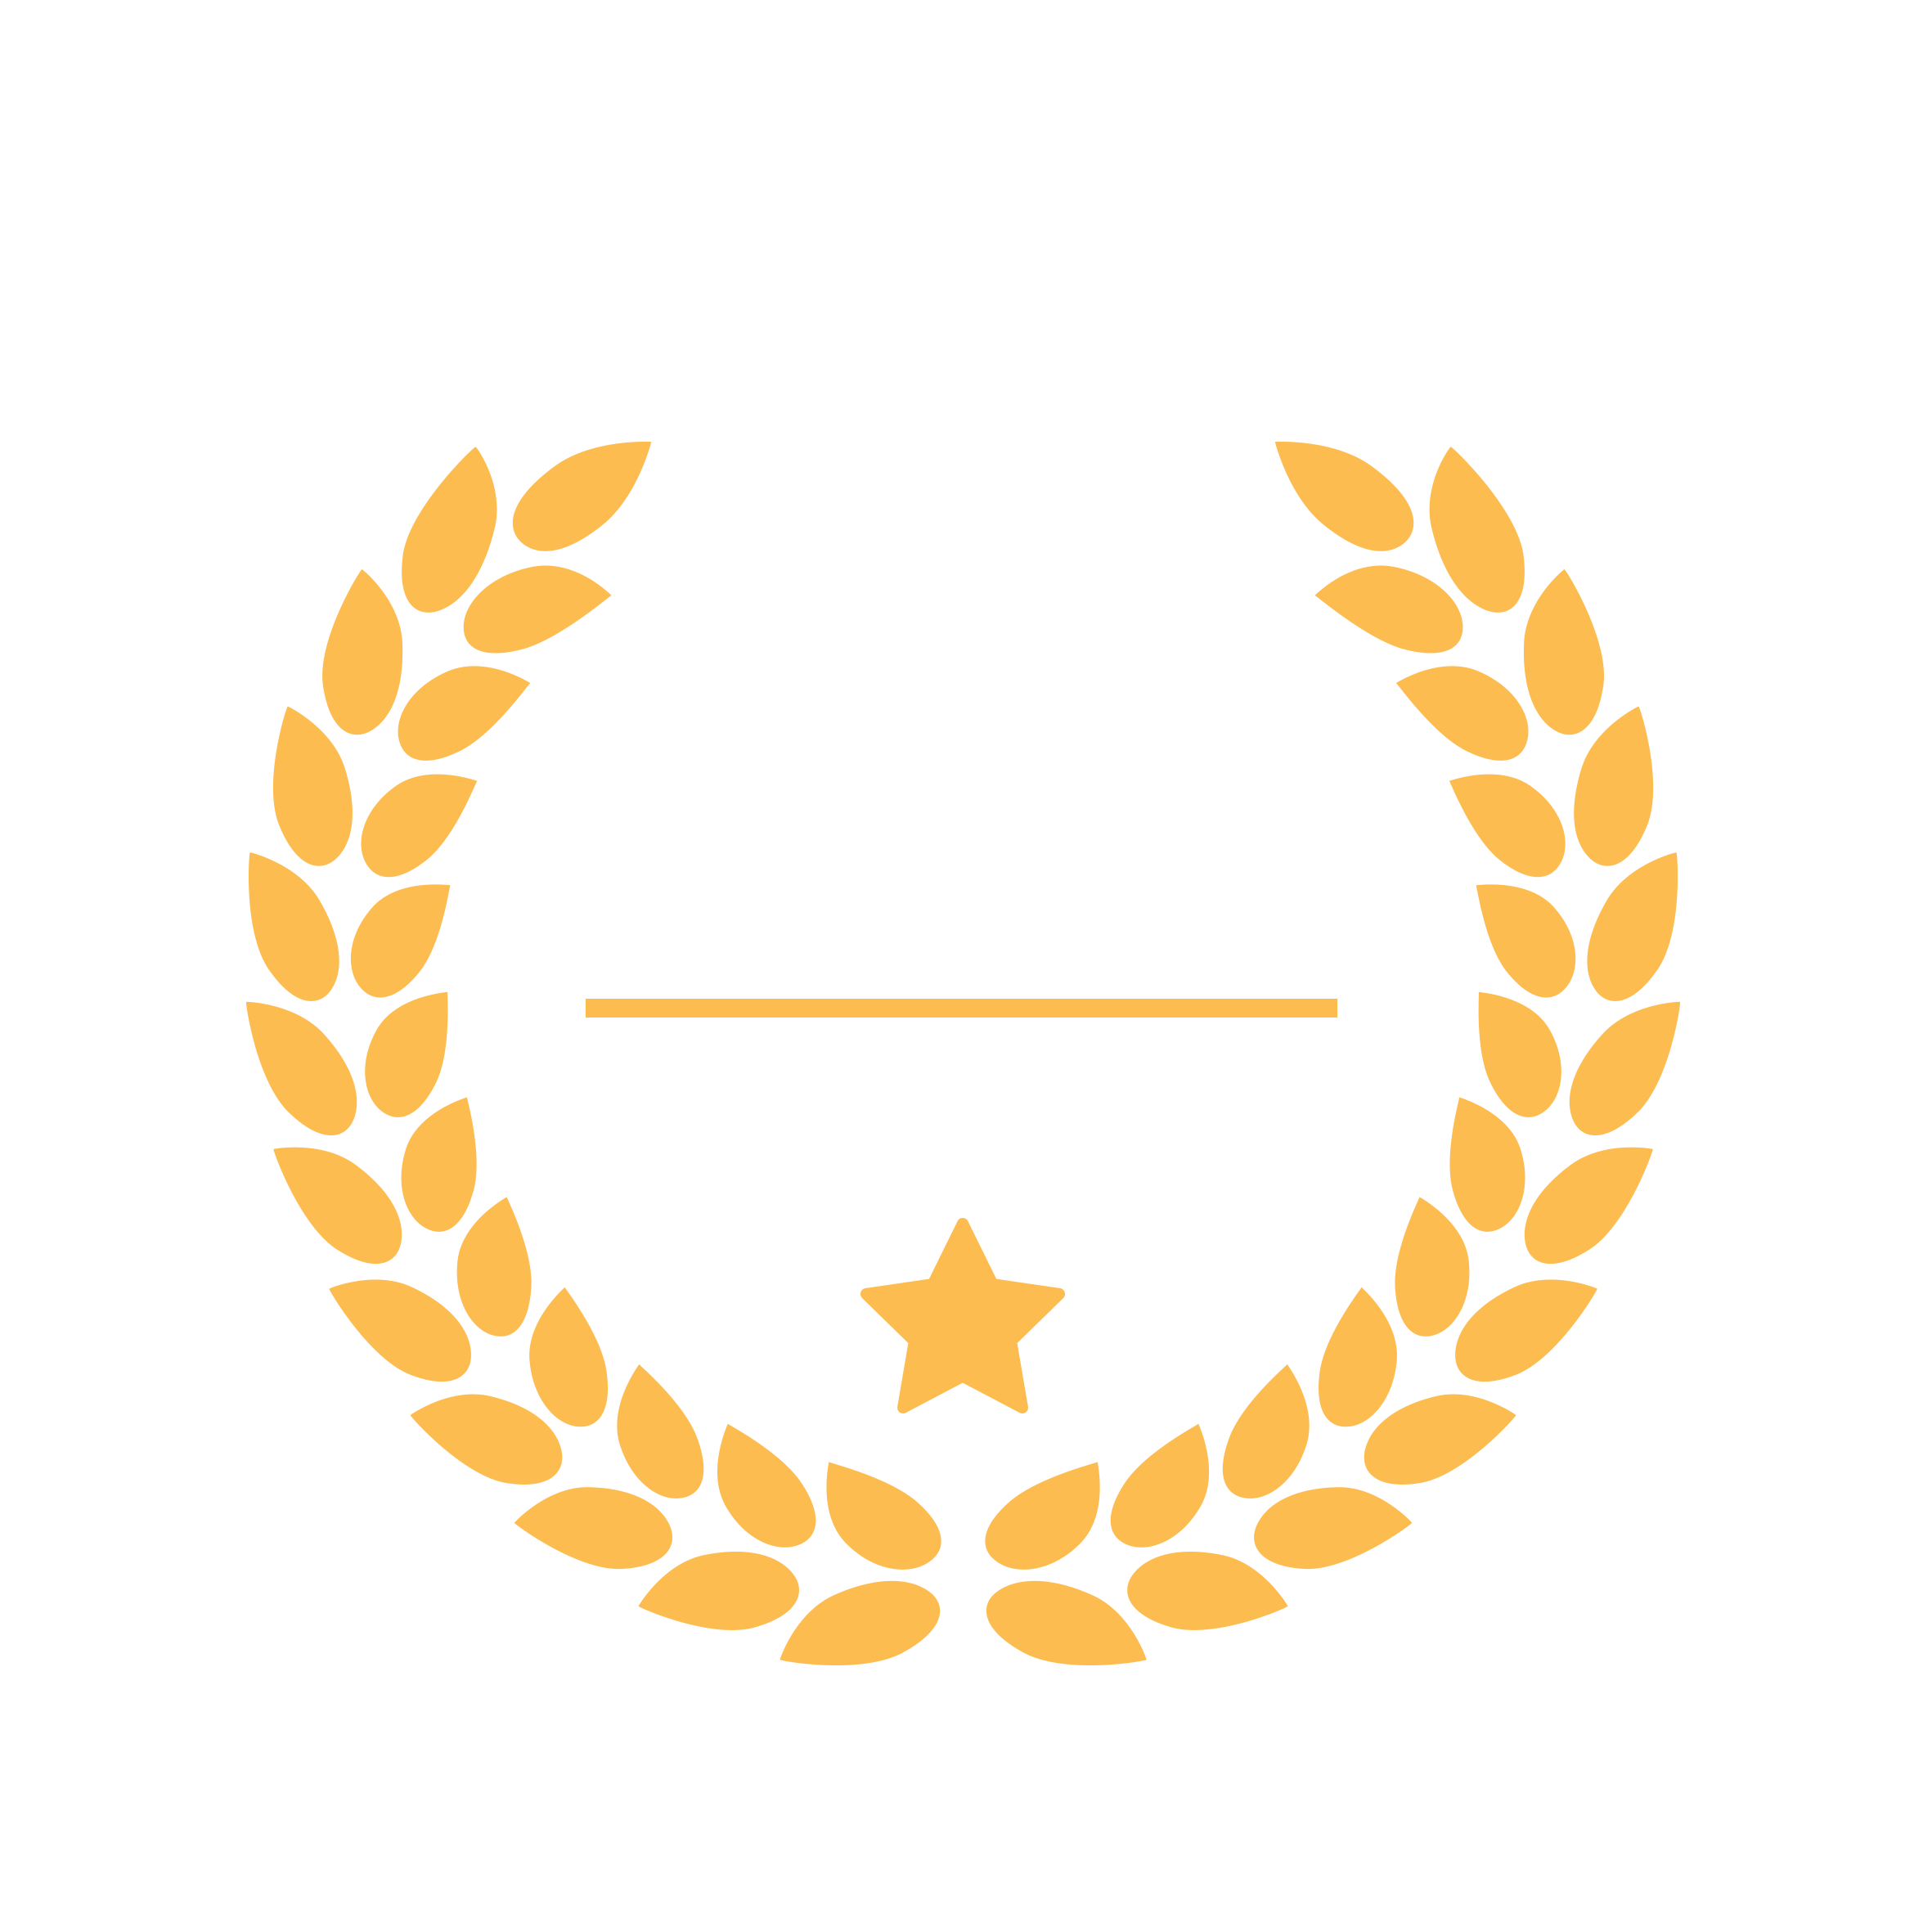 Logo Innovation Prize Lépine Paris 2013